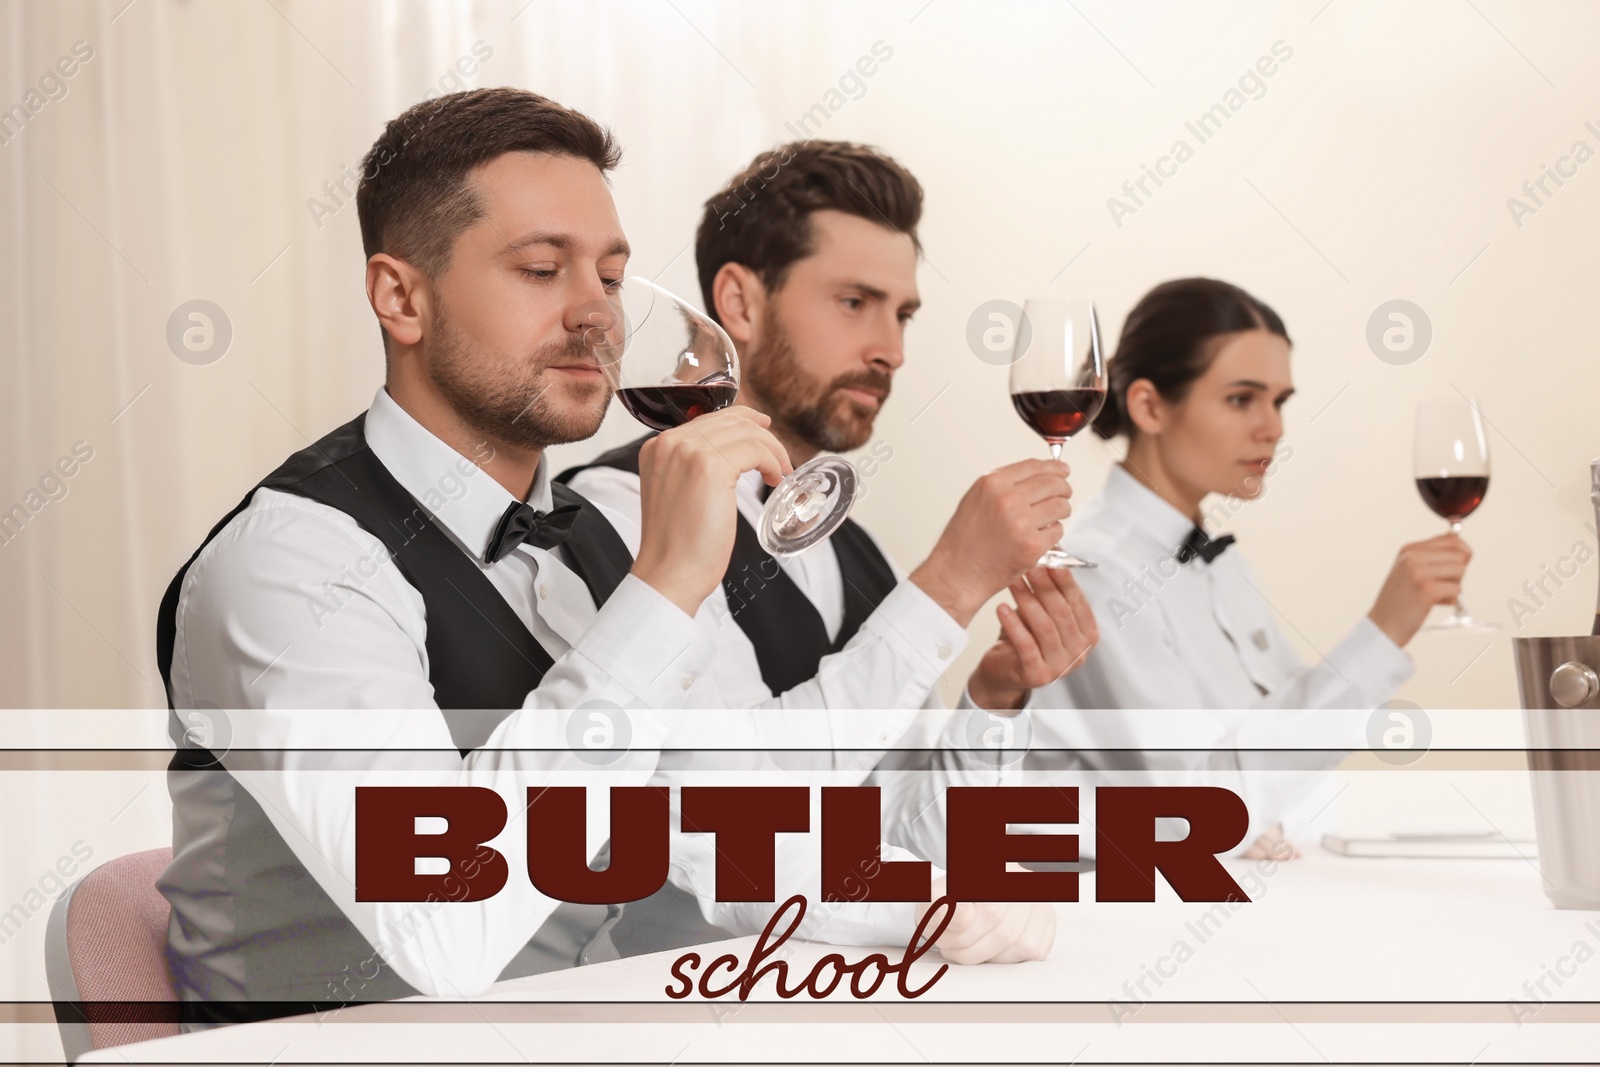 Image of Butler school. Group of people training in tasting red wine indoors